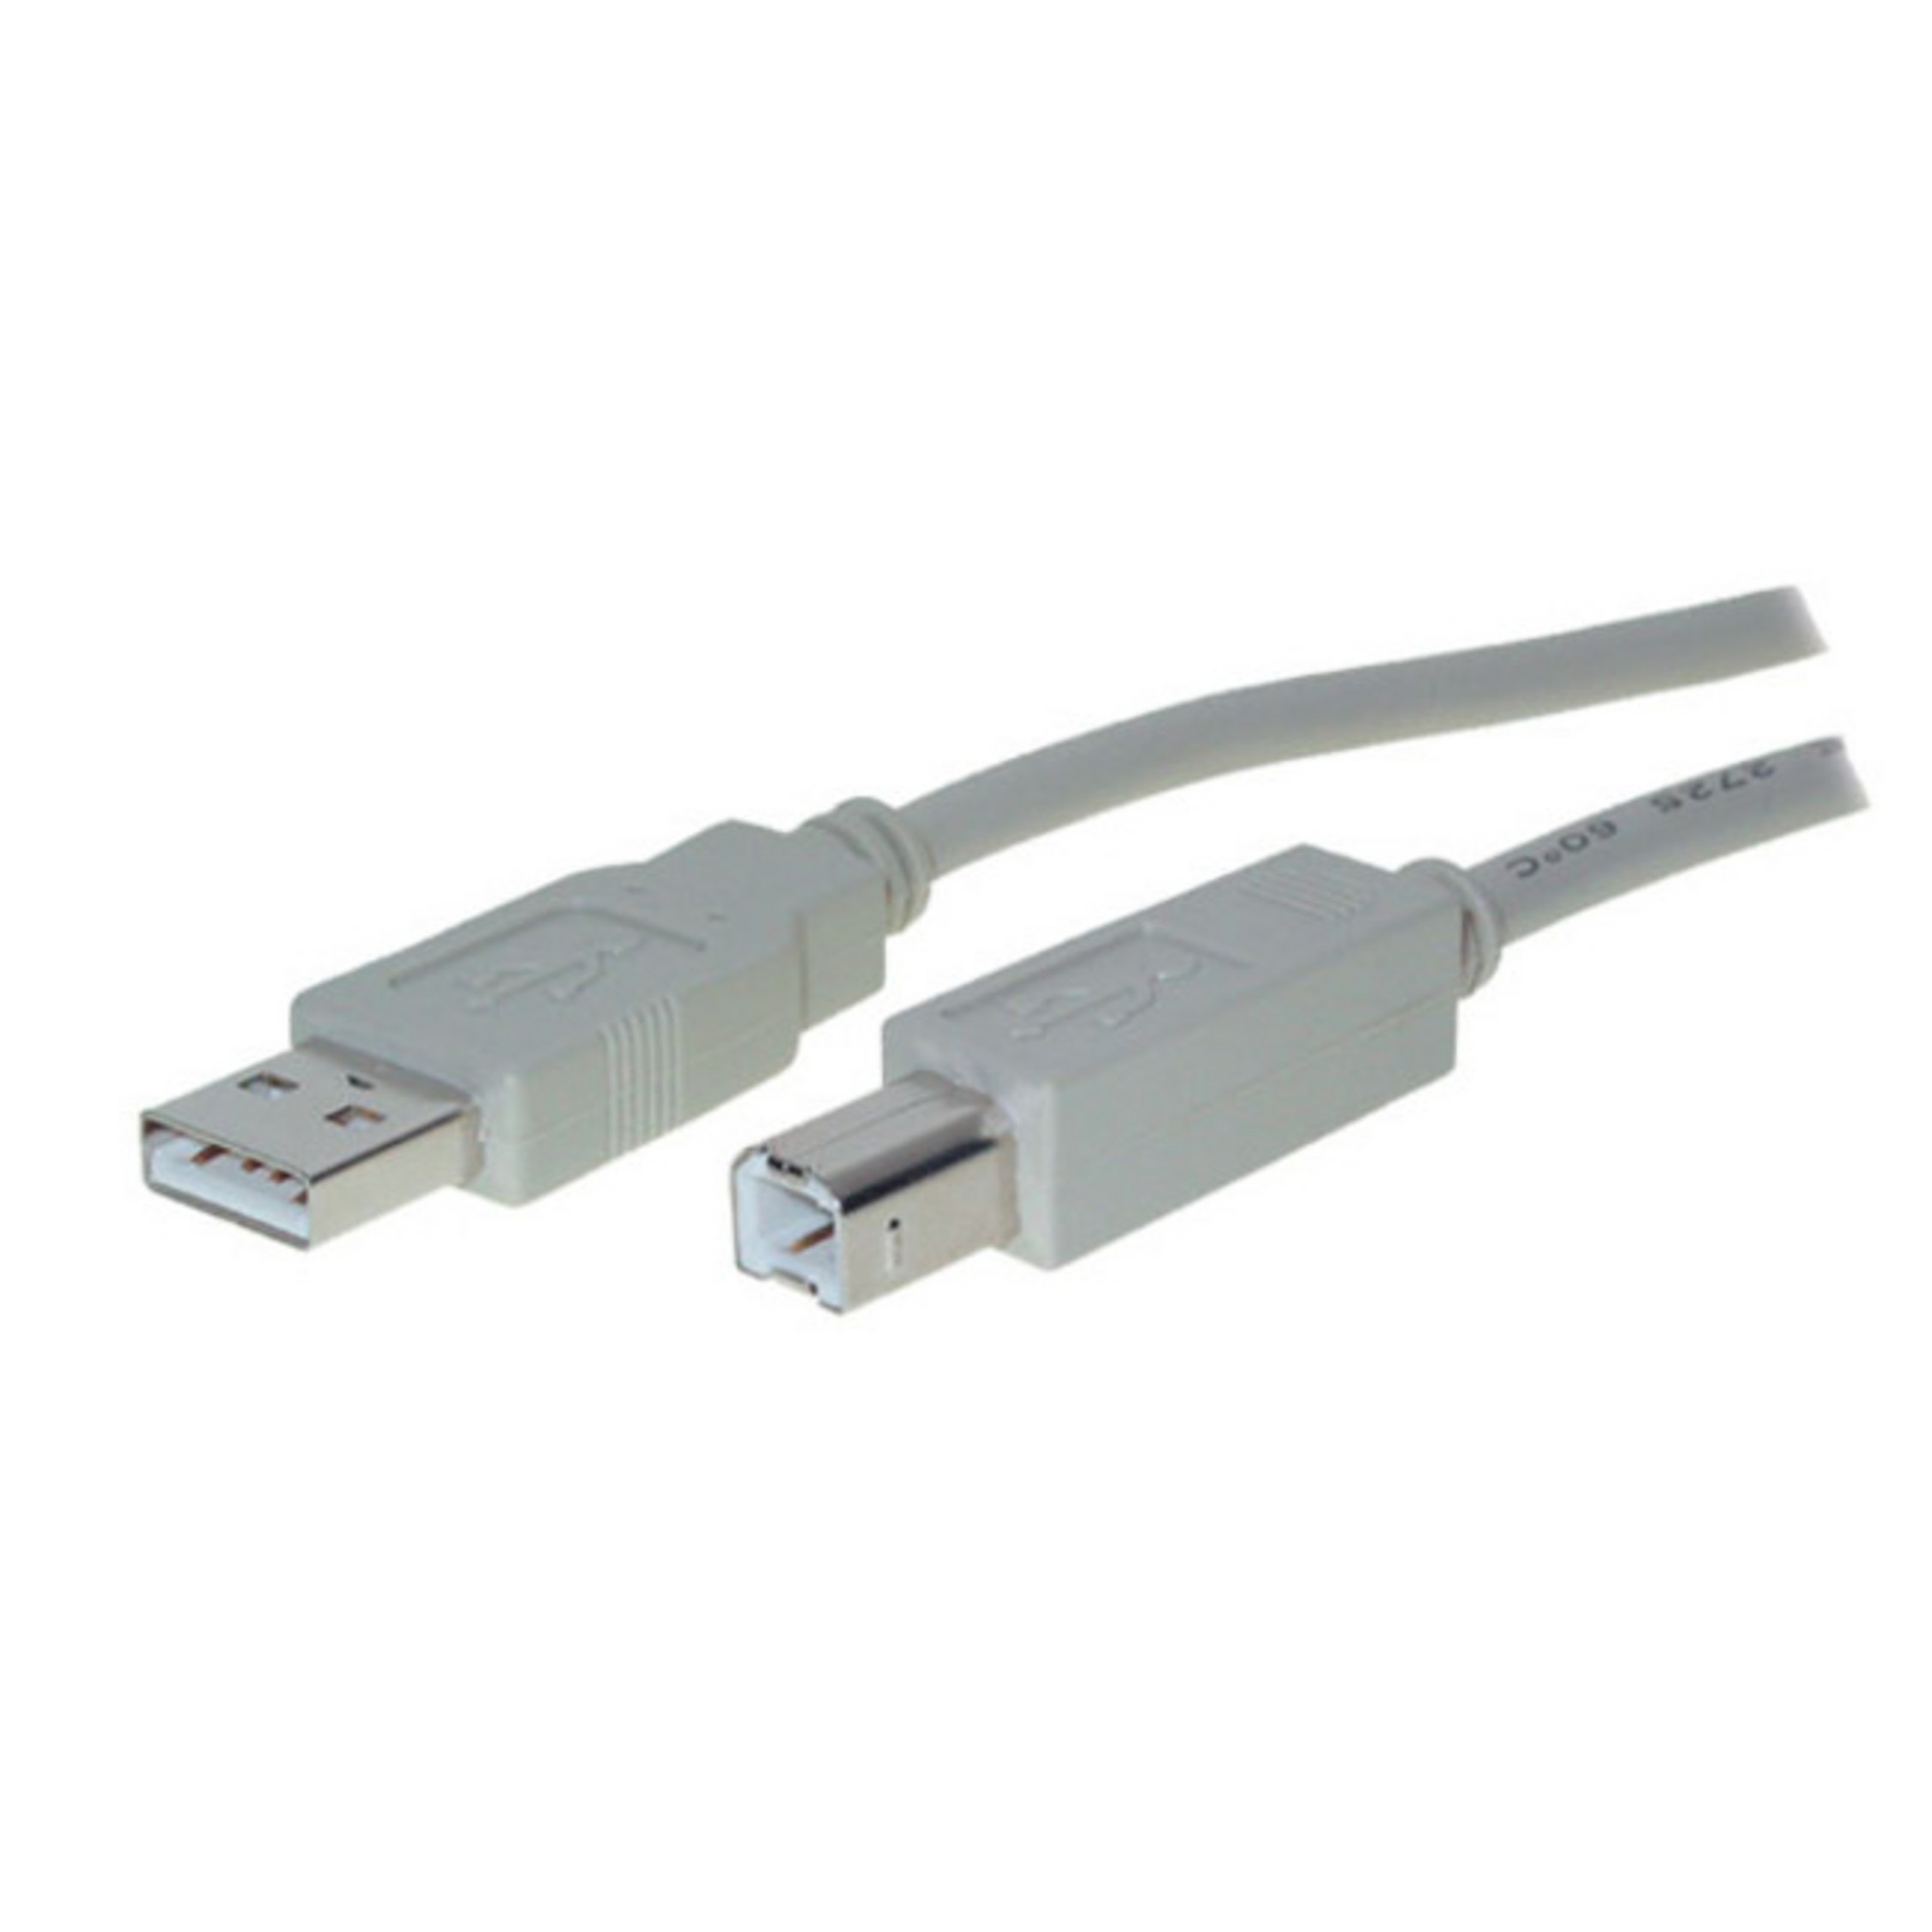 Kabel B 0,25m 2.0 S/CONN USB / MAXIMUM USB USB Kabel A CONNECTIVITY Stecker Stecker